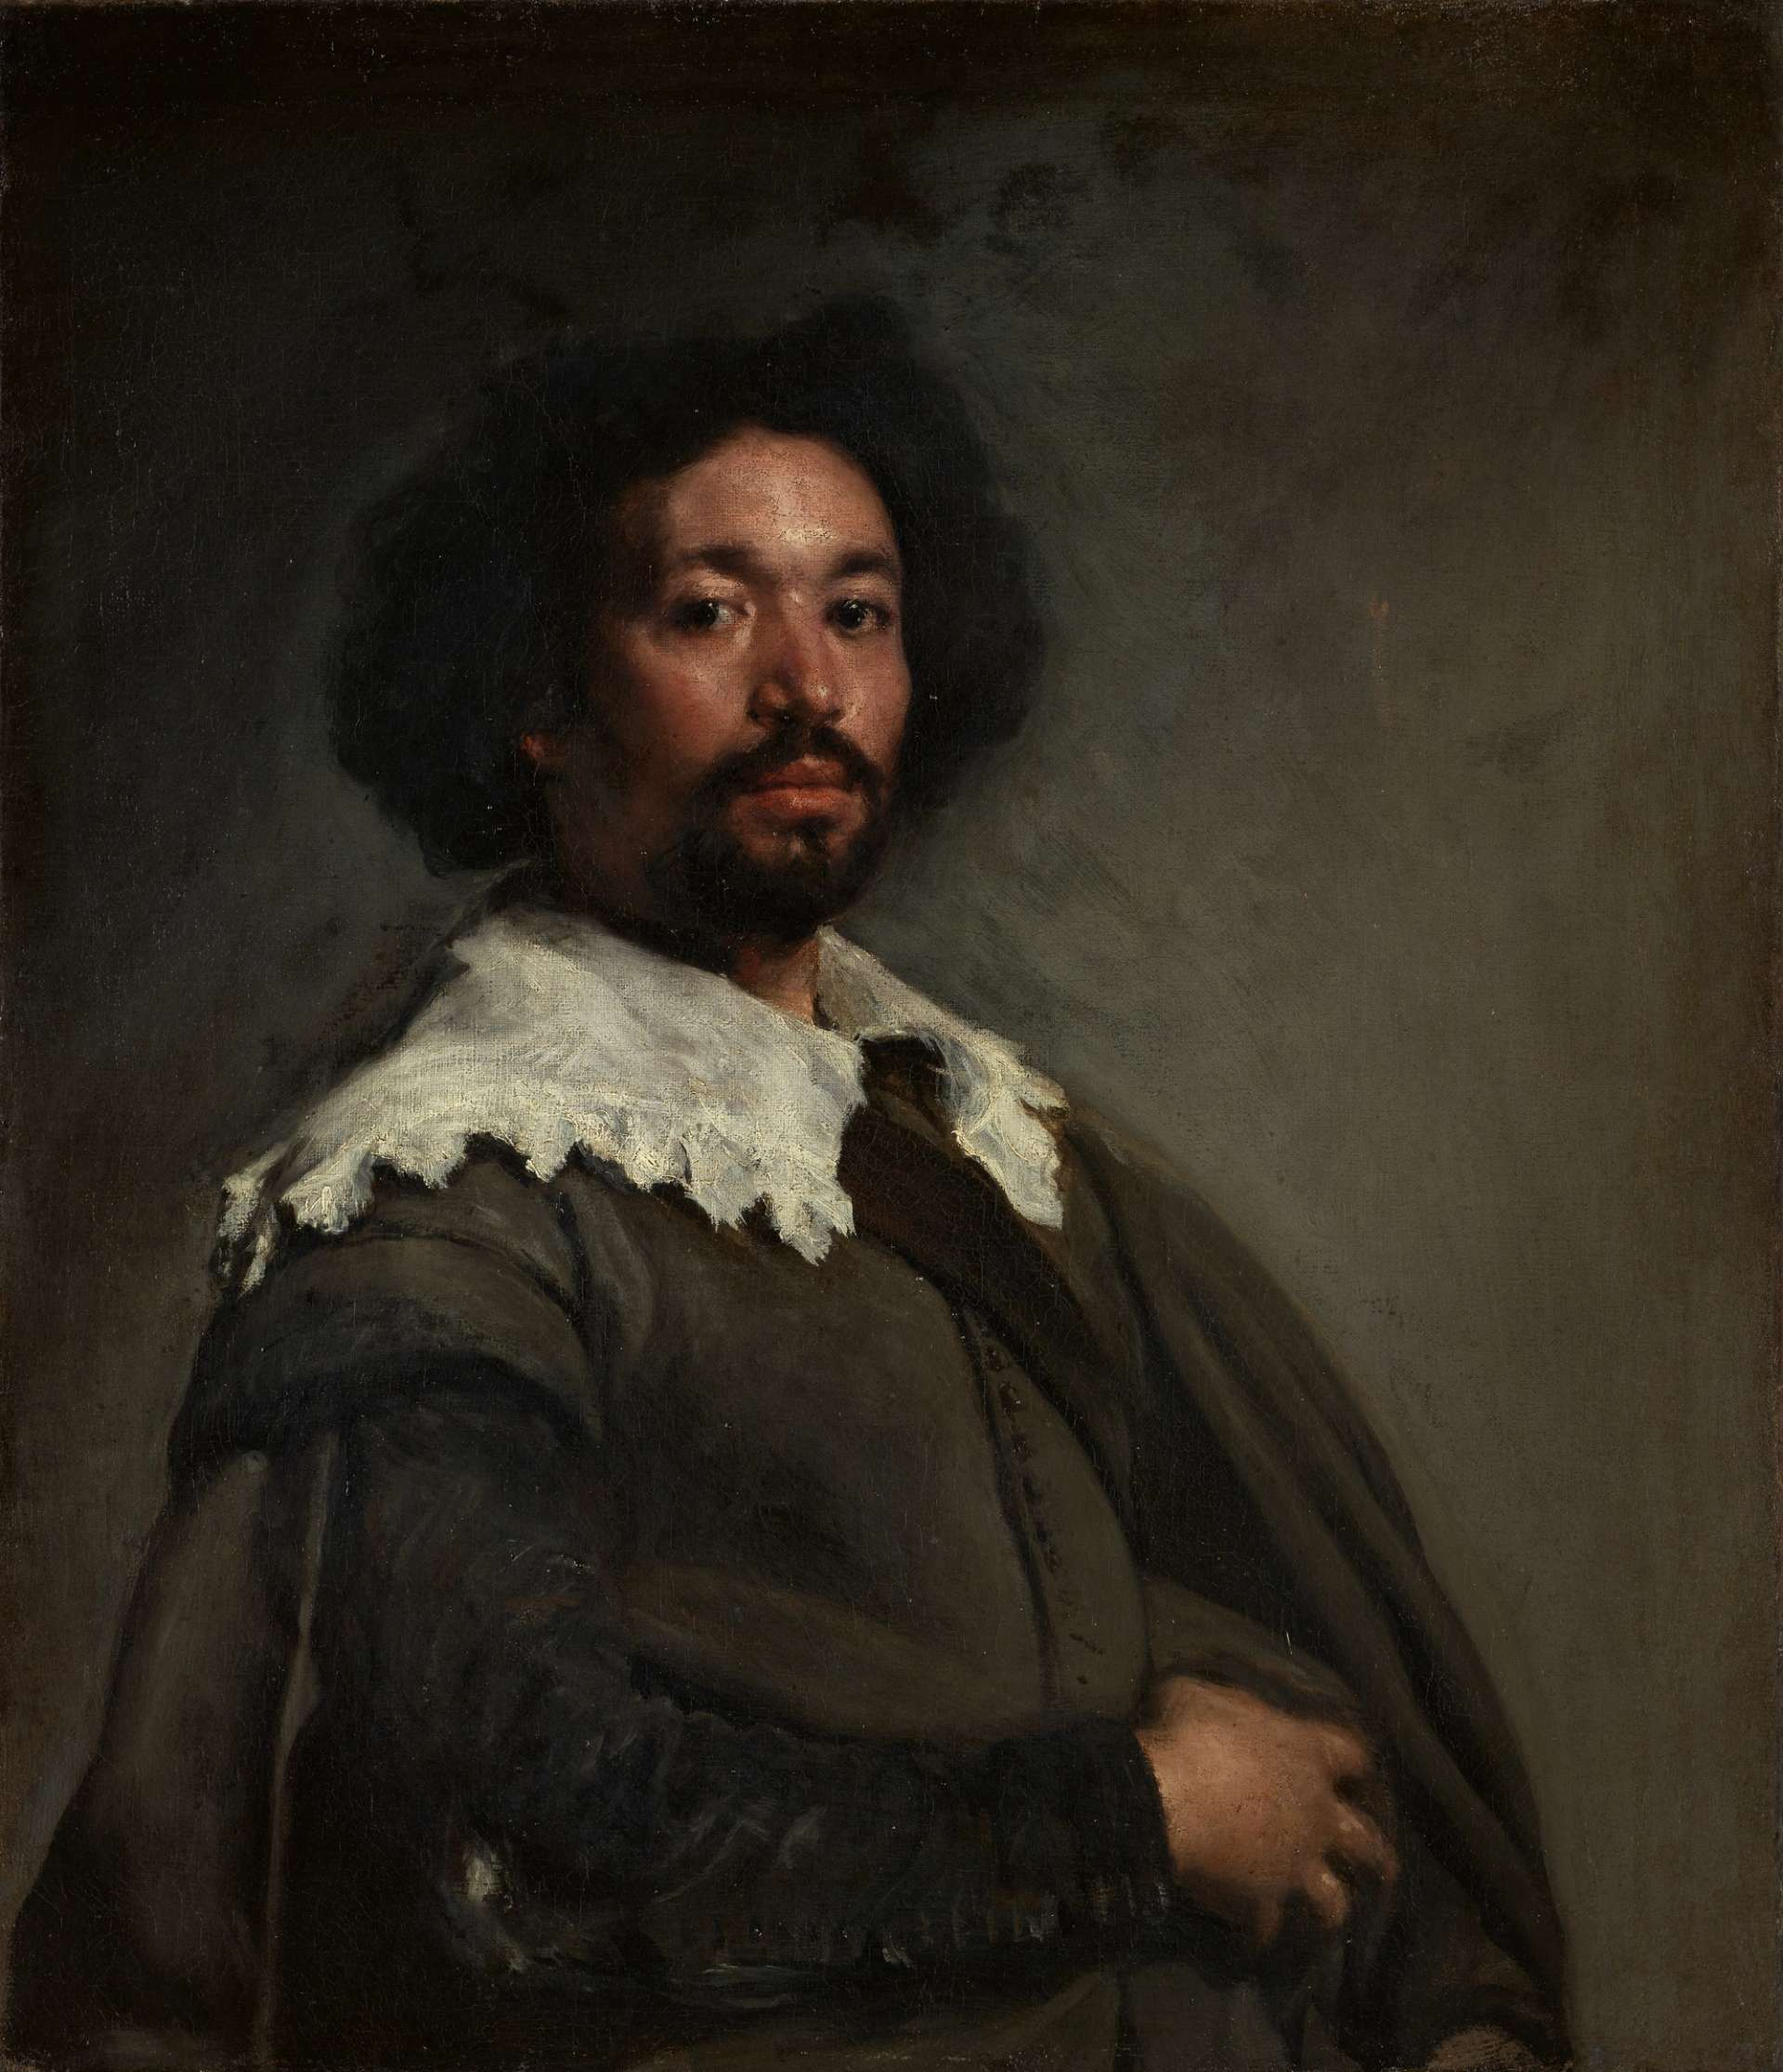 A portrait of a gentlemen wearing period dress against a dark washed background.